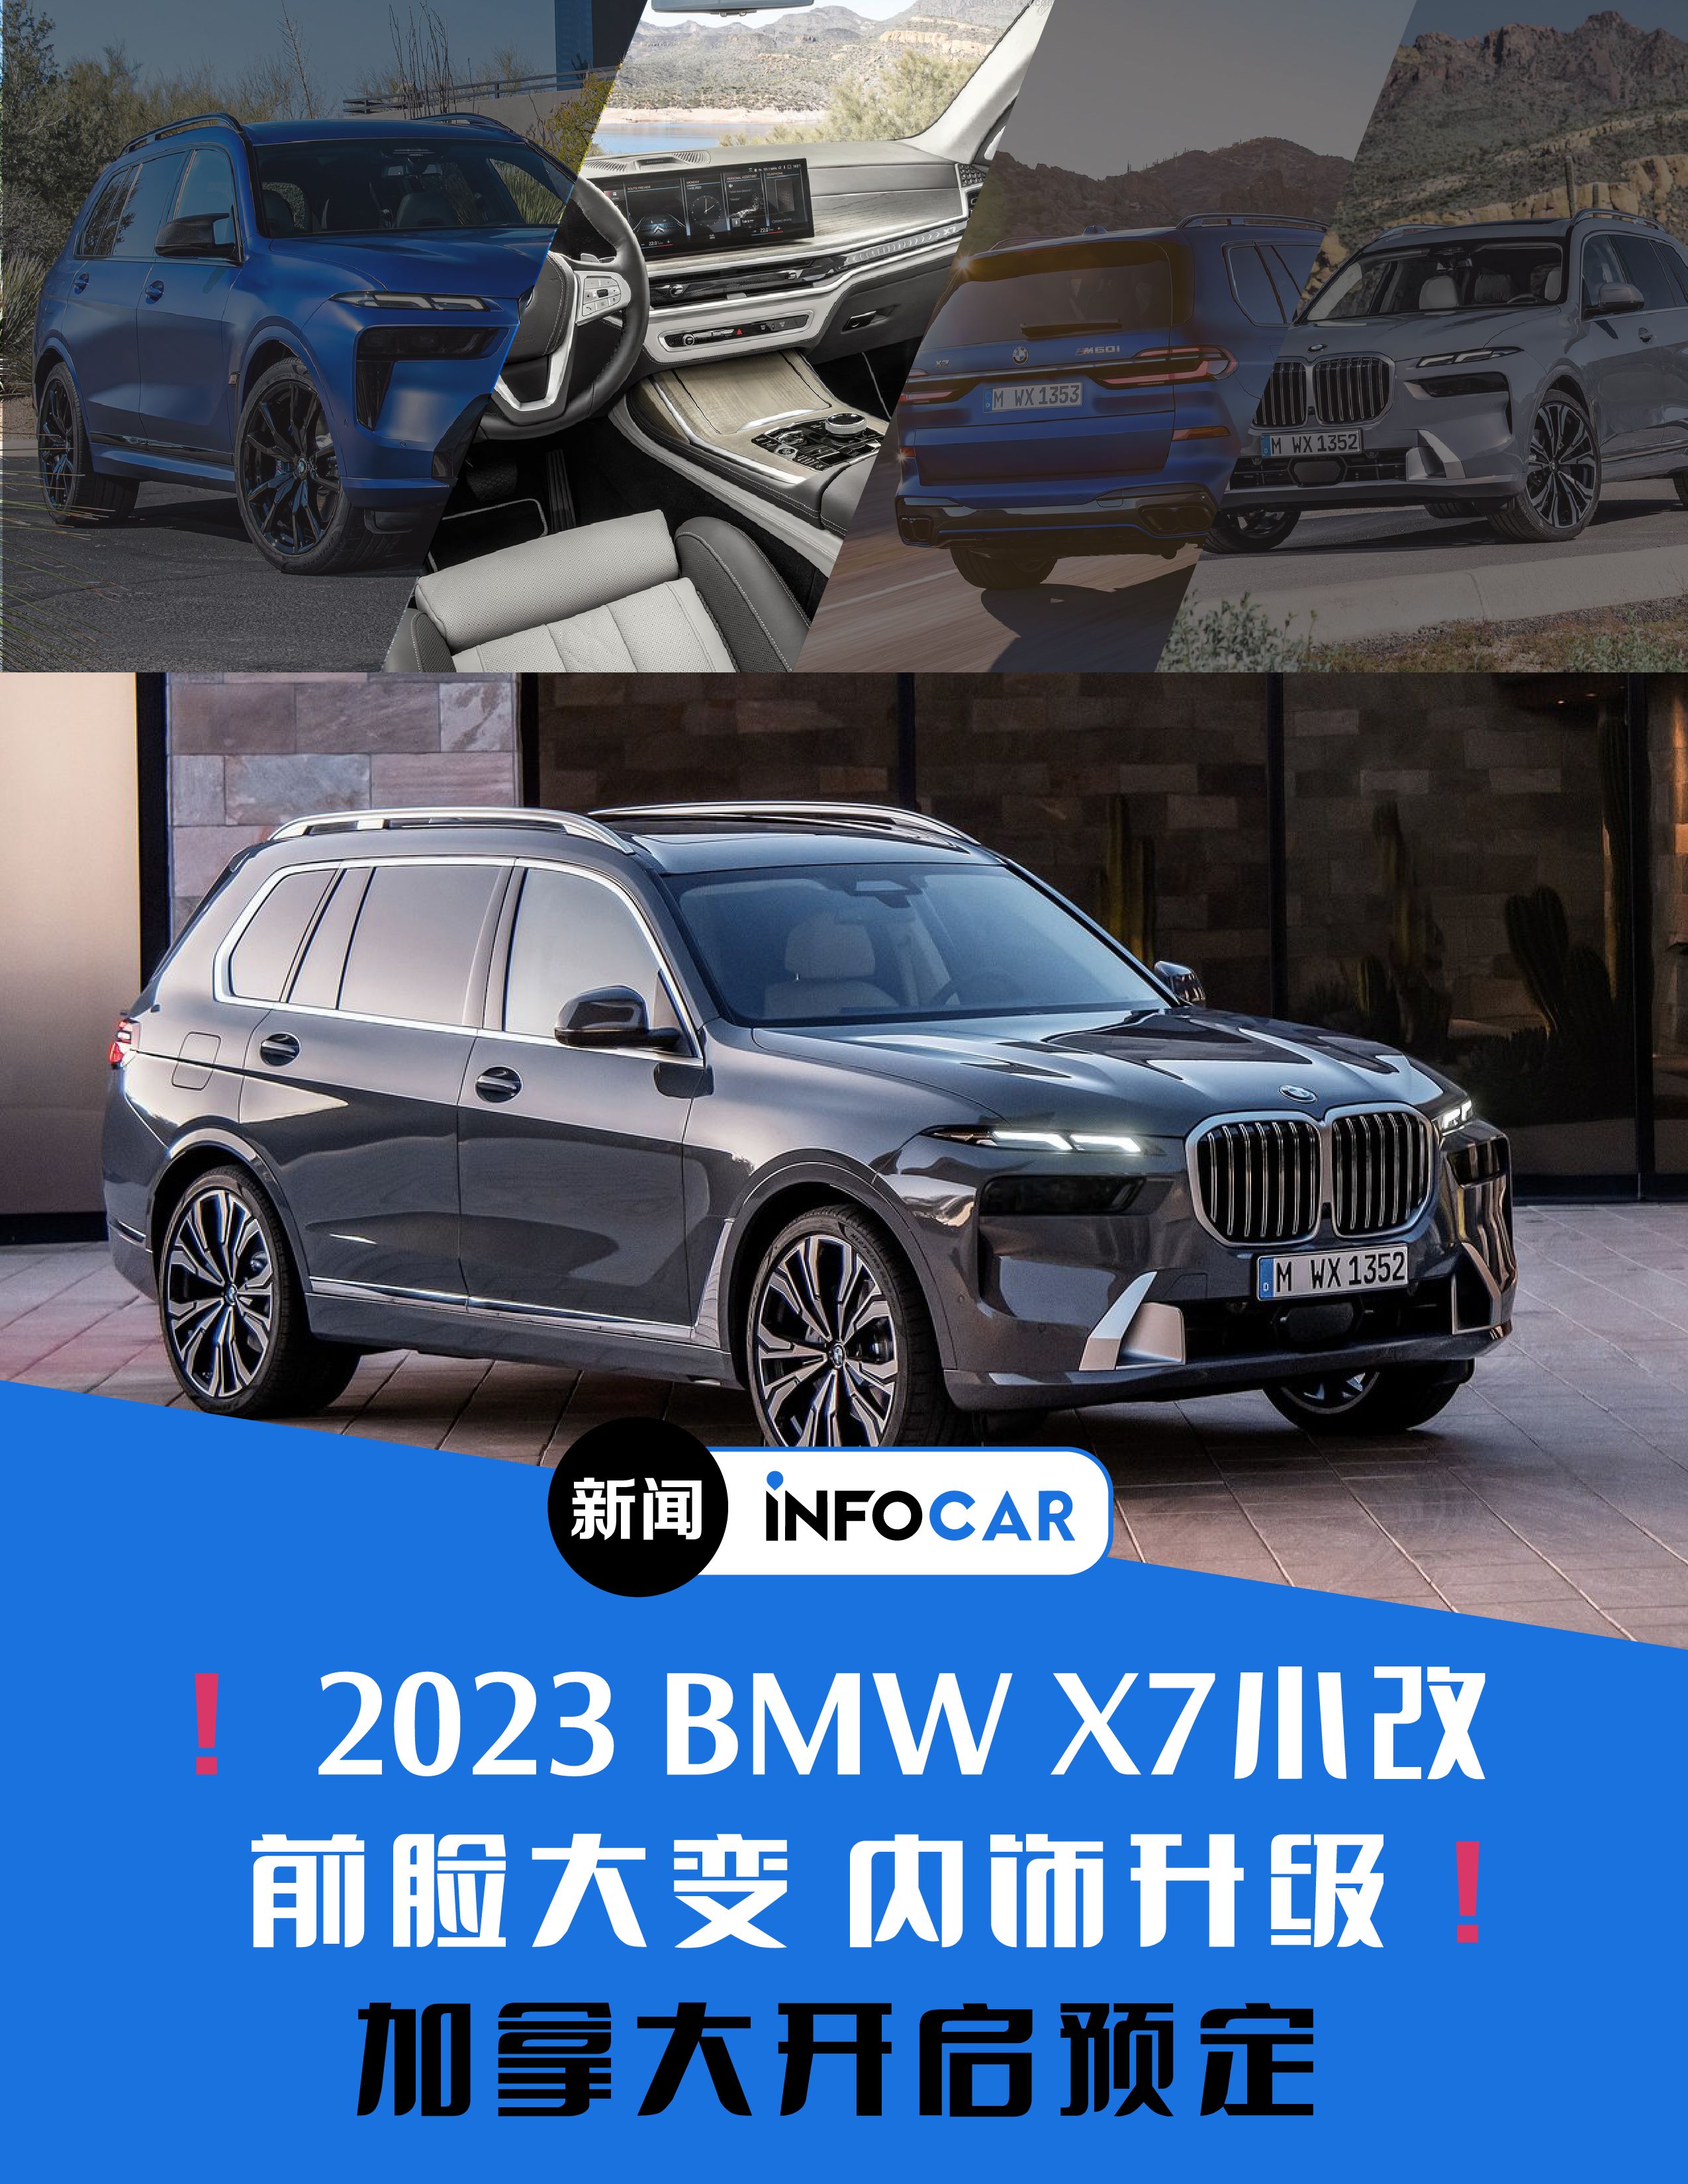 INFOCAR车闻：BMWX7 Facelift 推出小改款车型，前脸大变，内饰升级